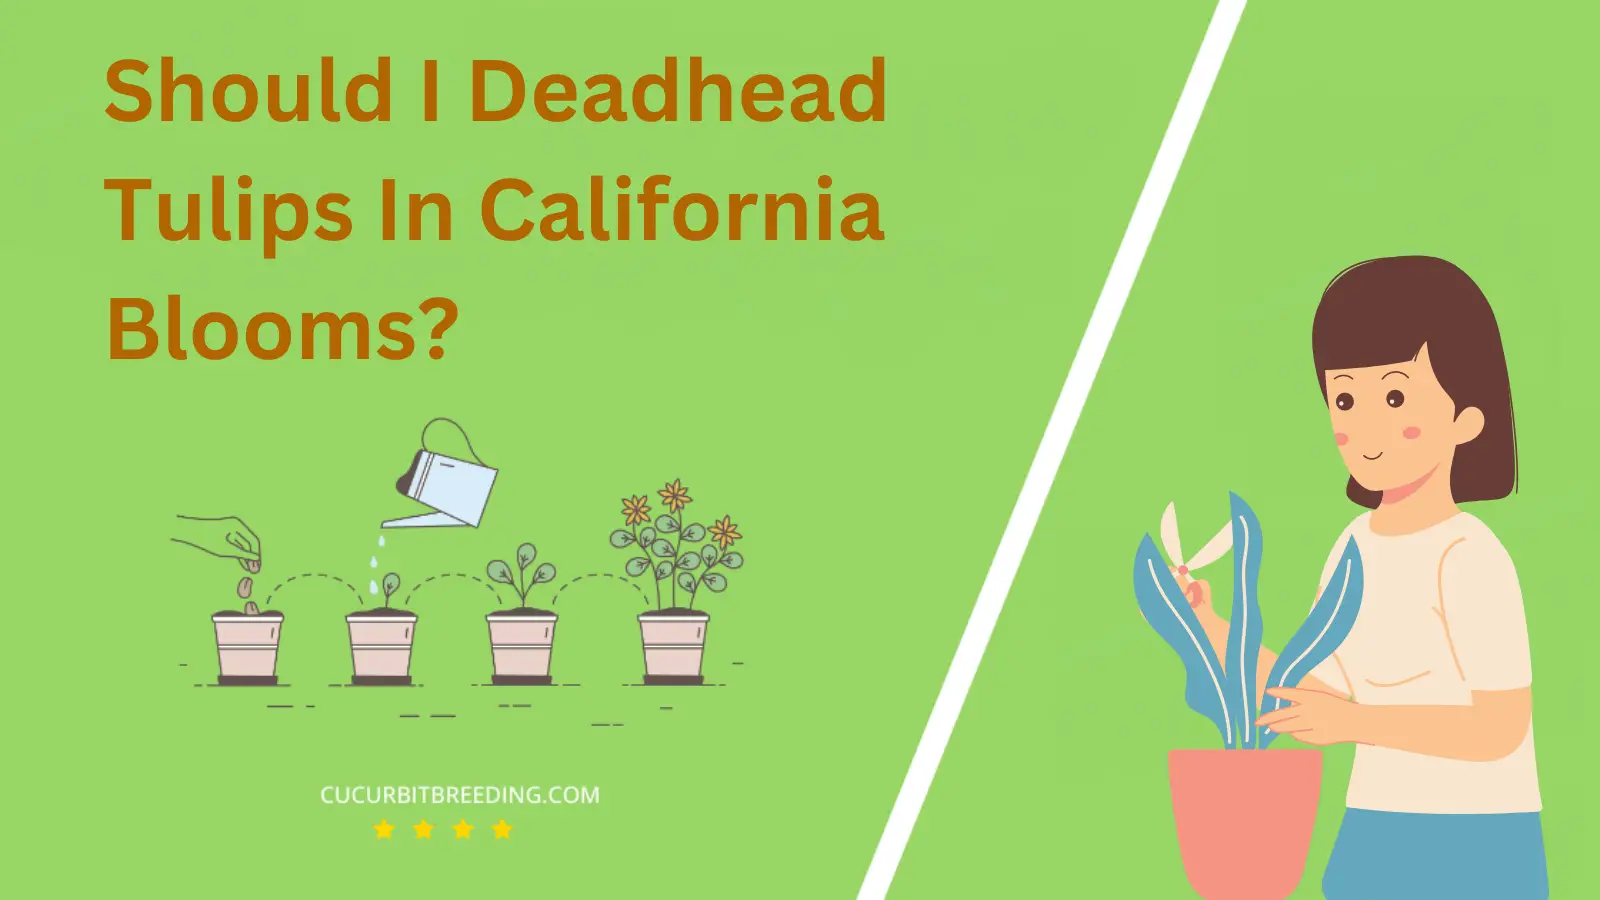 Should I Deadhead Tulips In California Blooms?